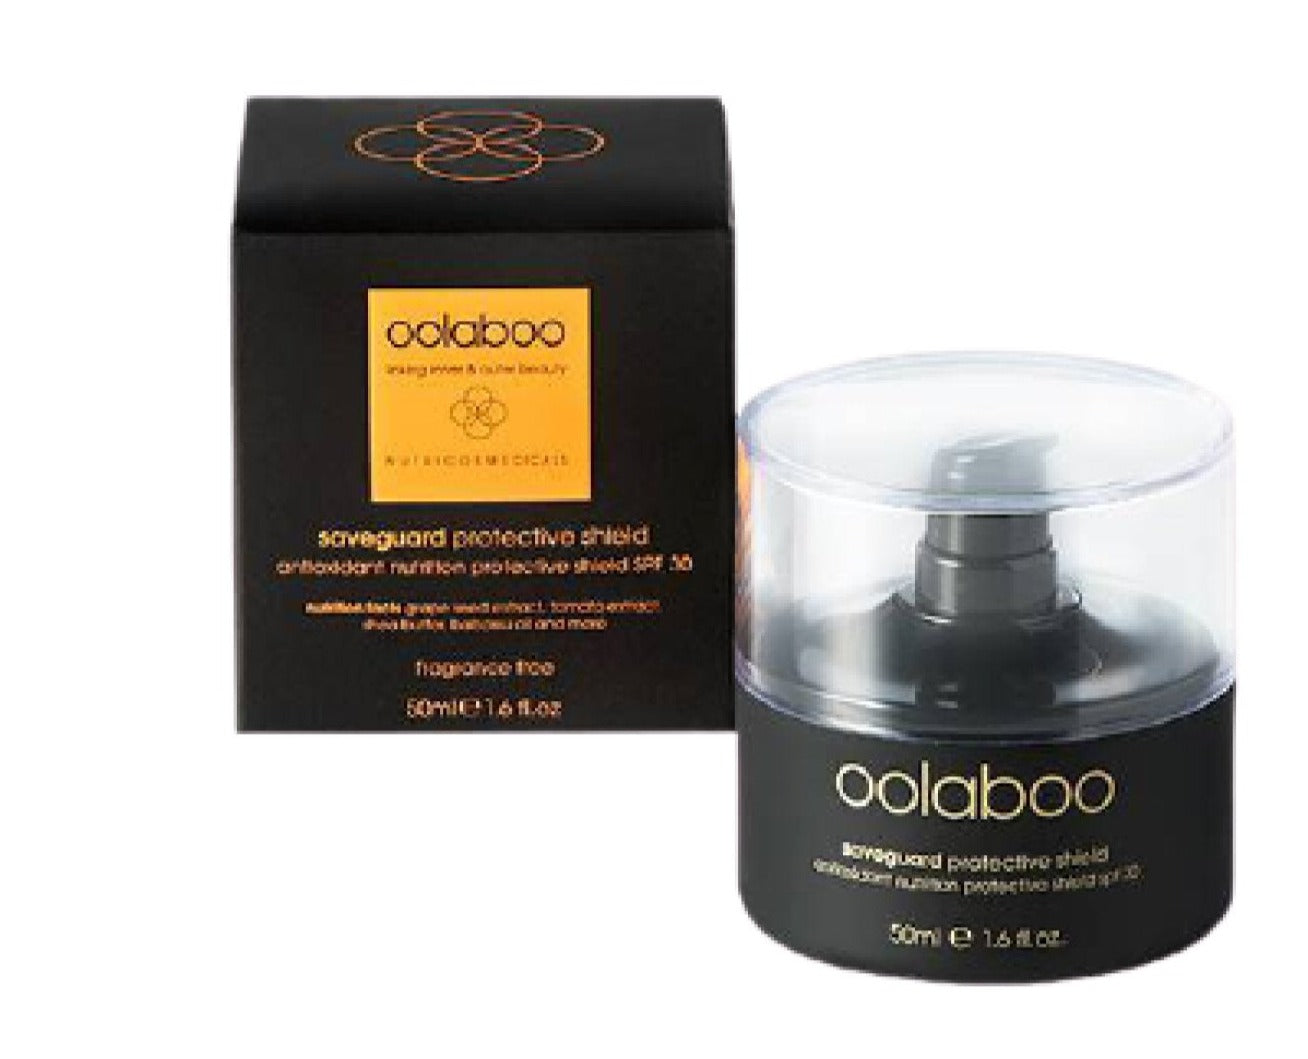 Oolaboo Saveguard Protective Shield Spf 30 50 ml - Salon Warehouse